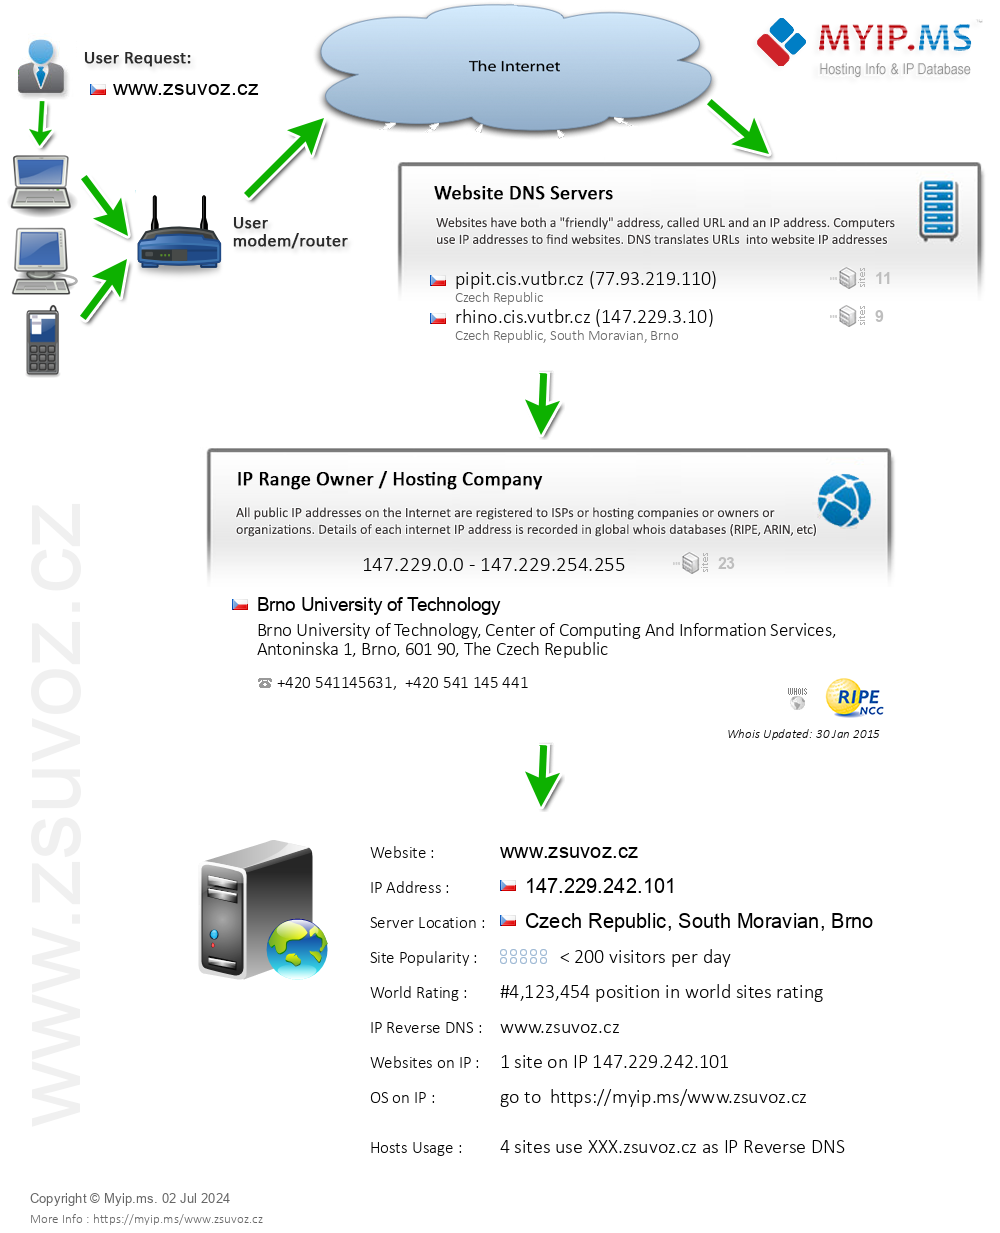 Zsuvoz.cz - Website Hosting Visual IP Diagram